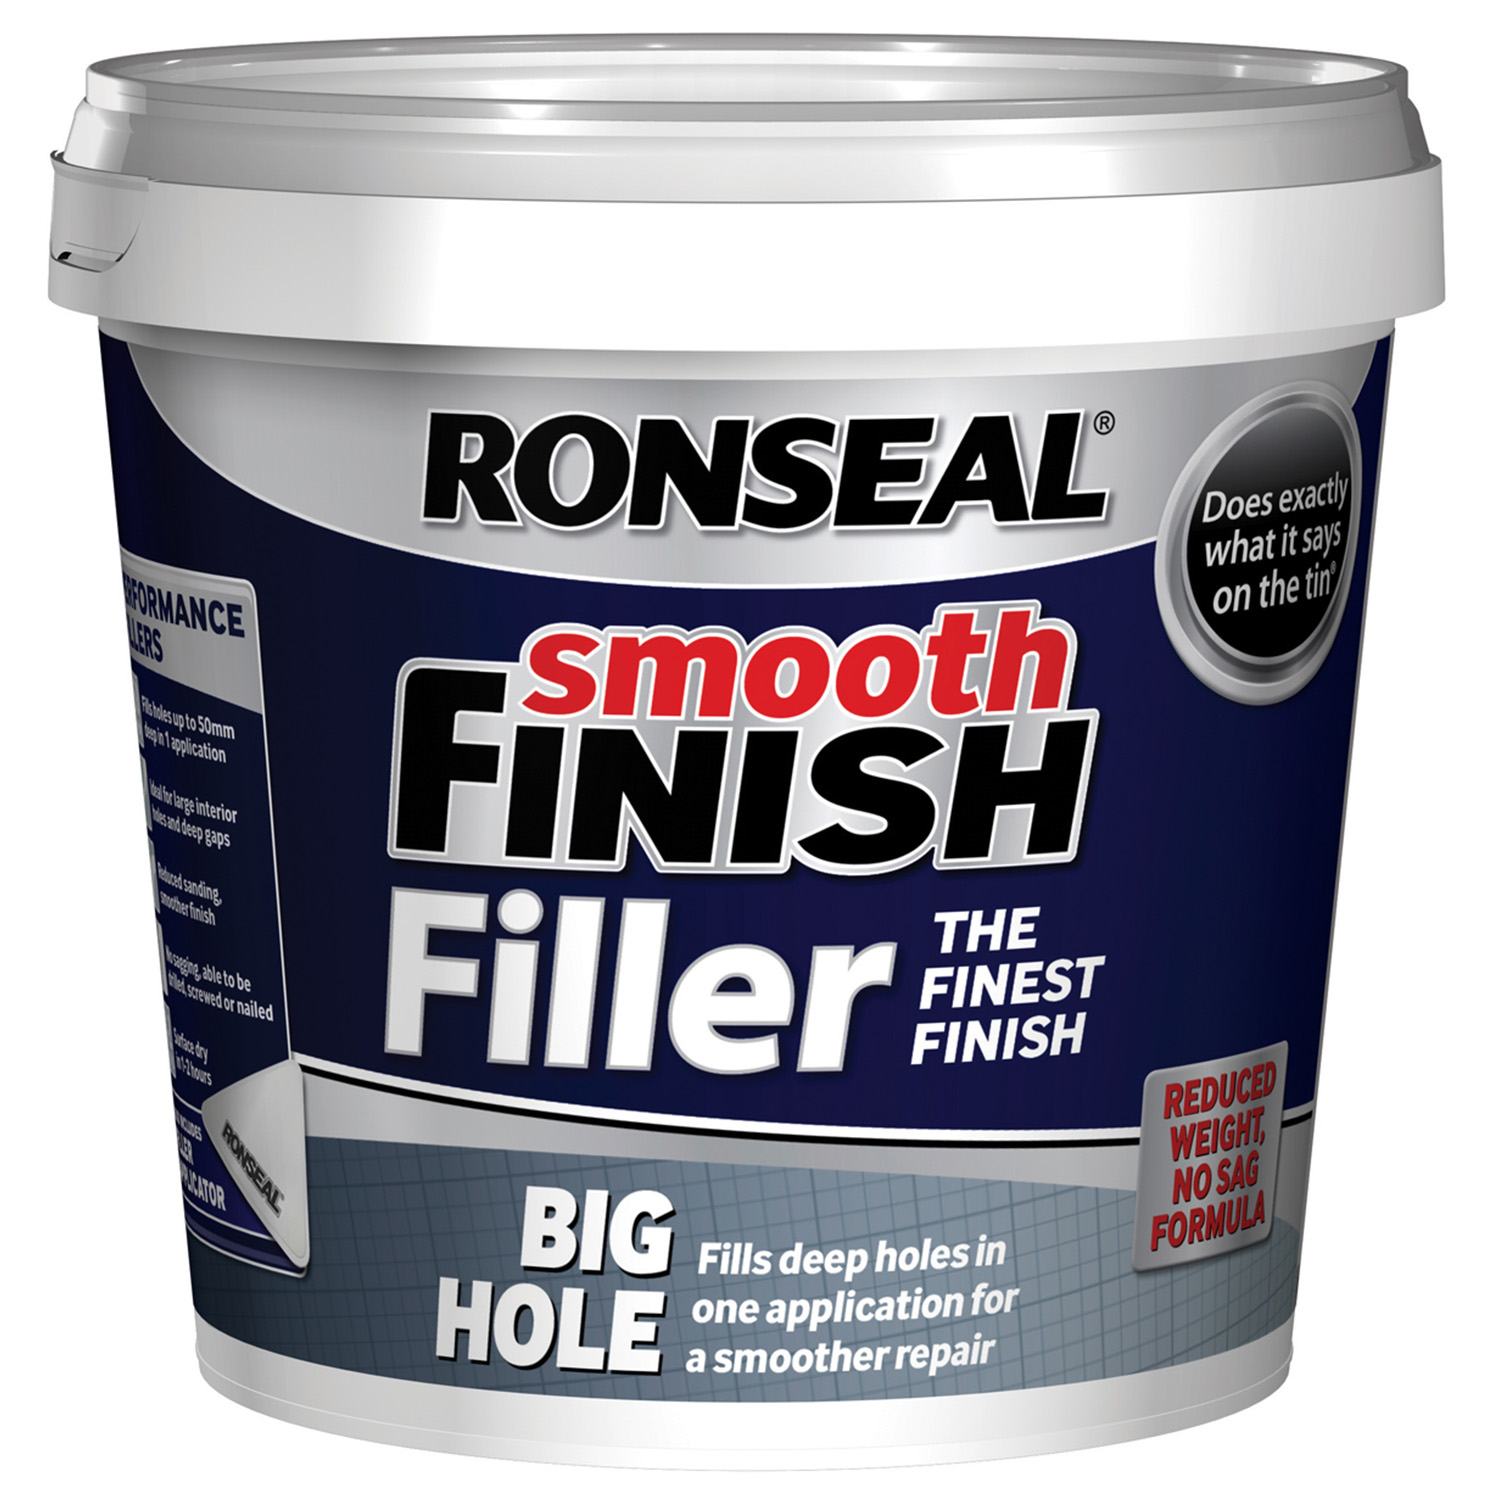 Ronseal Big Hole Smooth Finish Filler Image